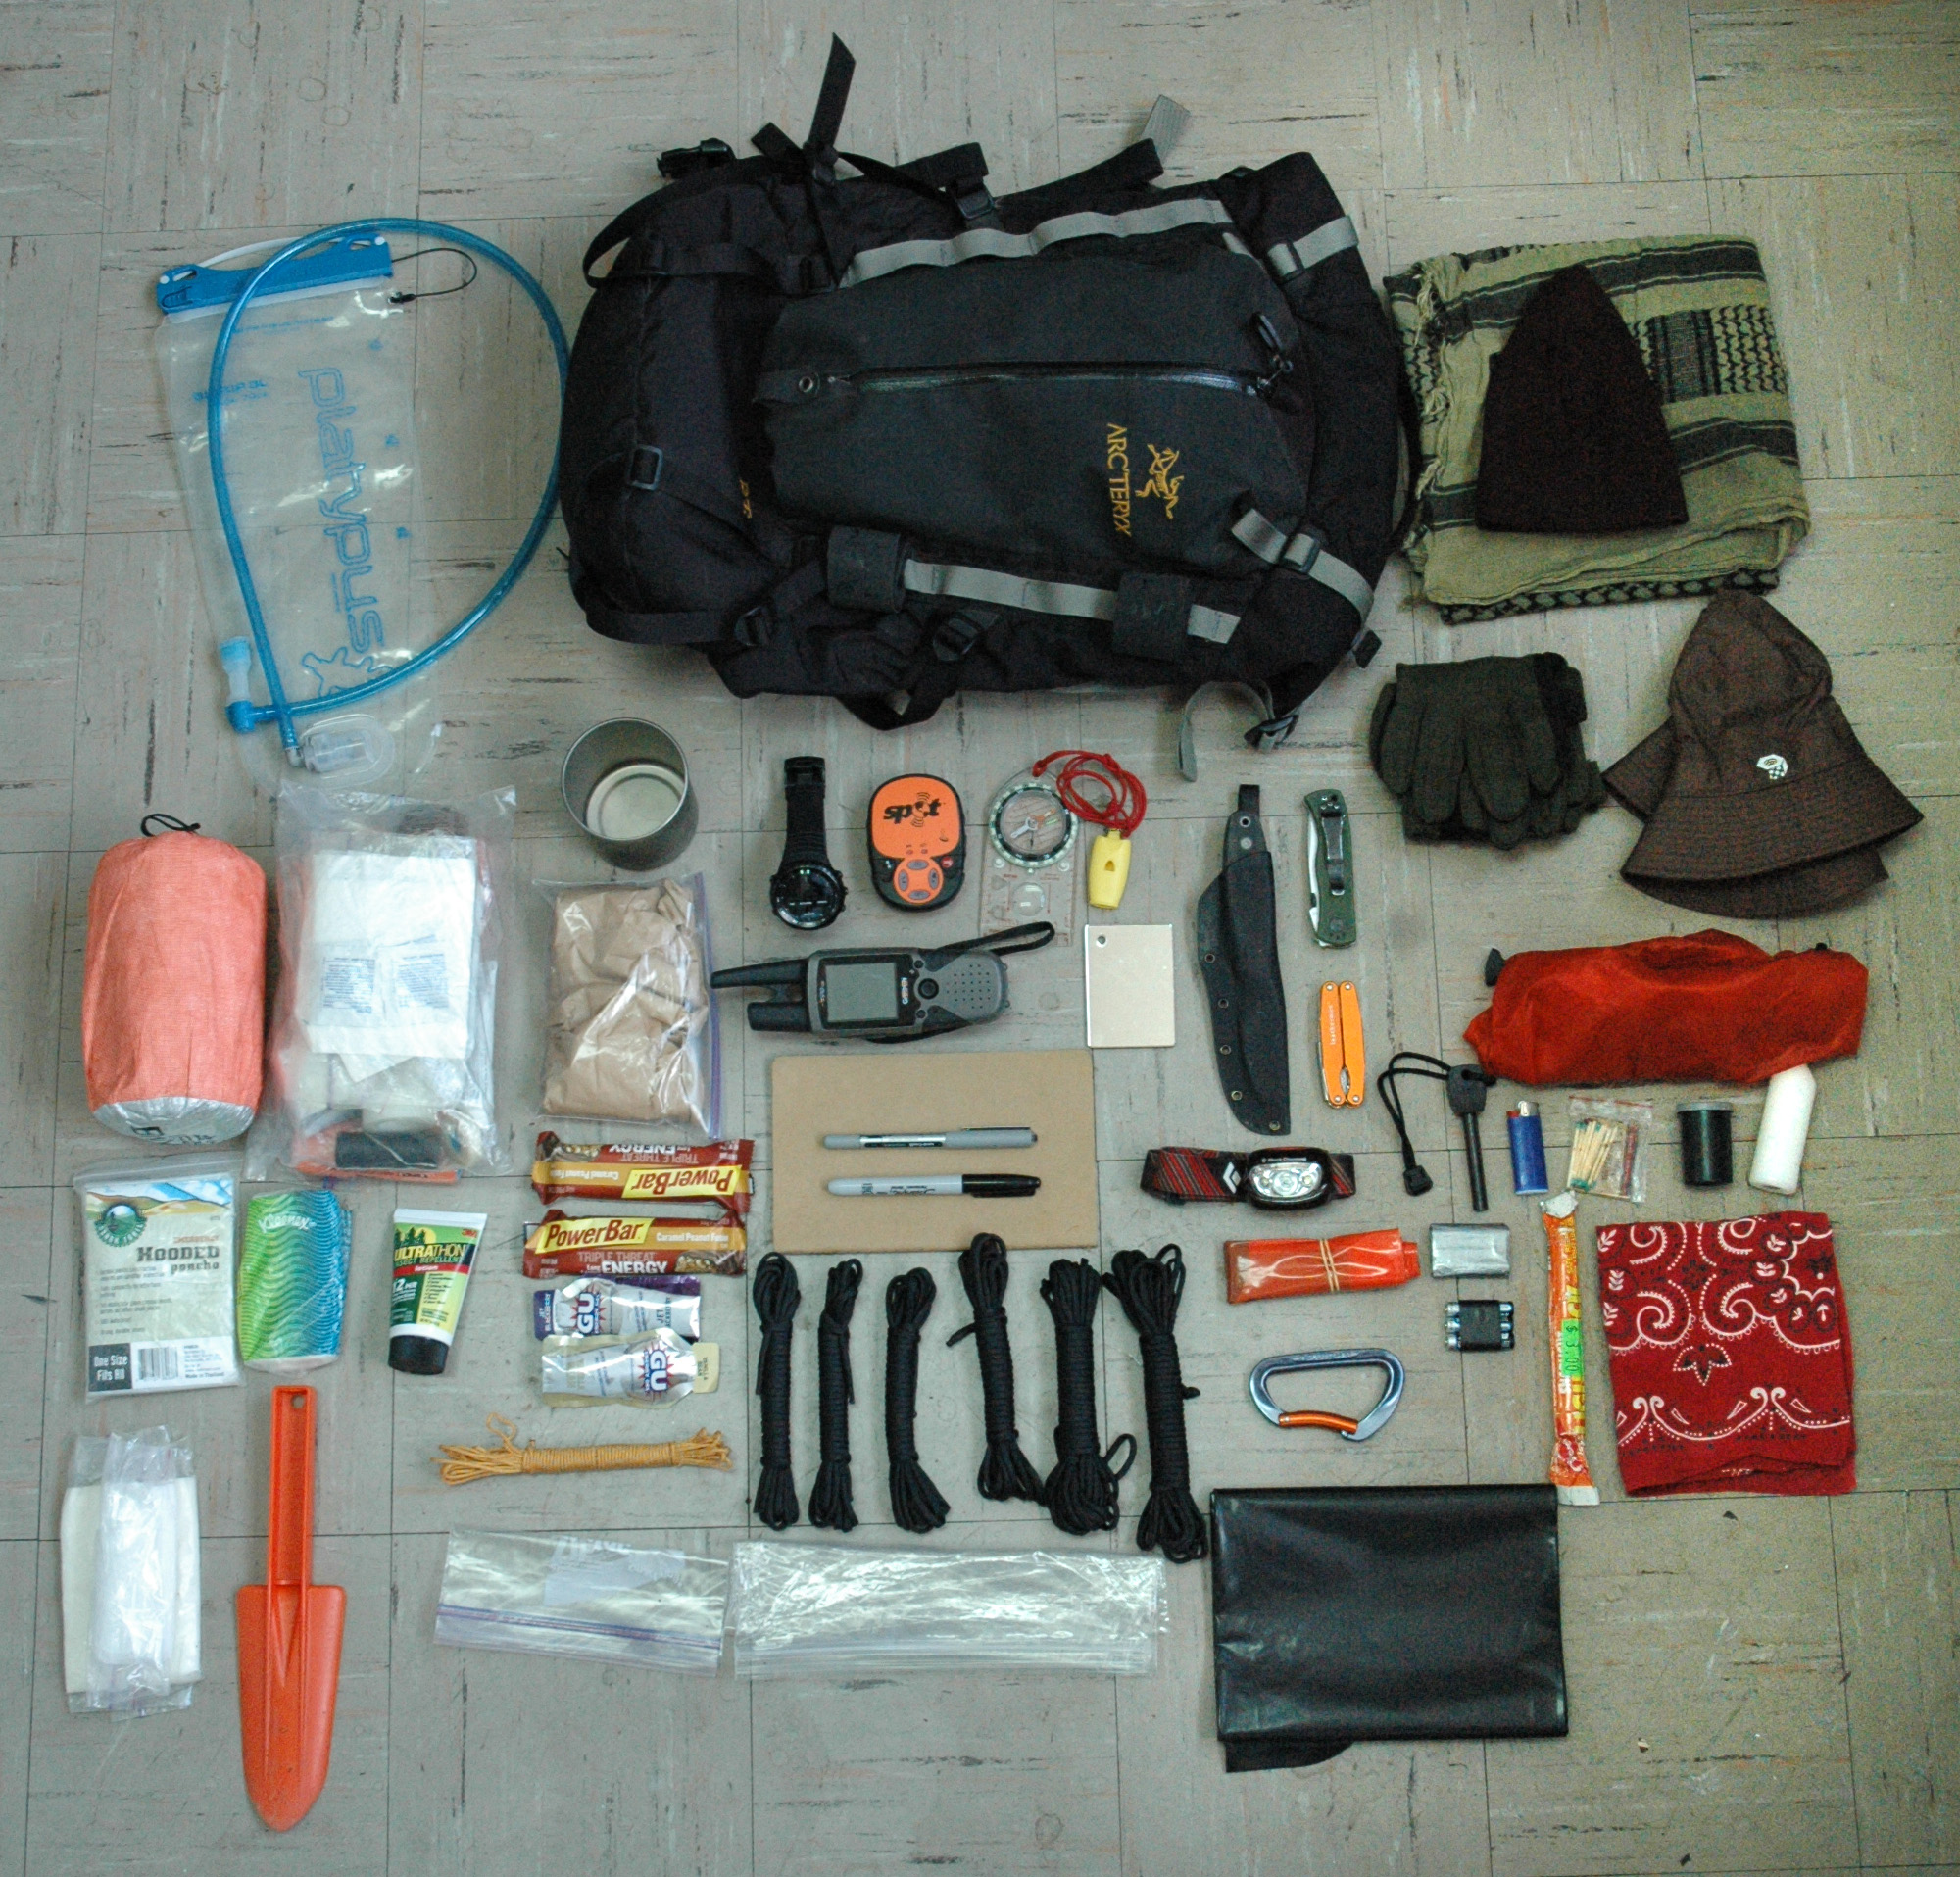 My Day Hike Kit – Mark 1.0